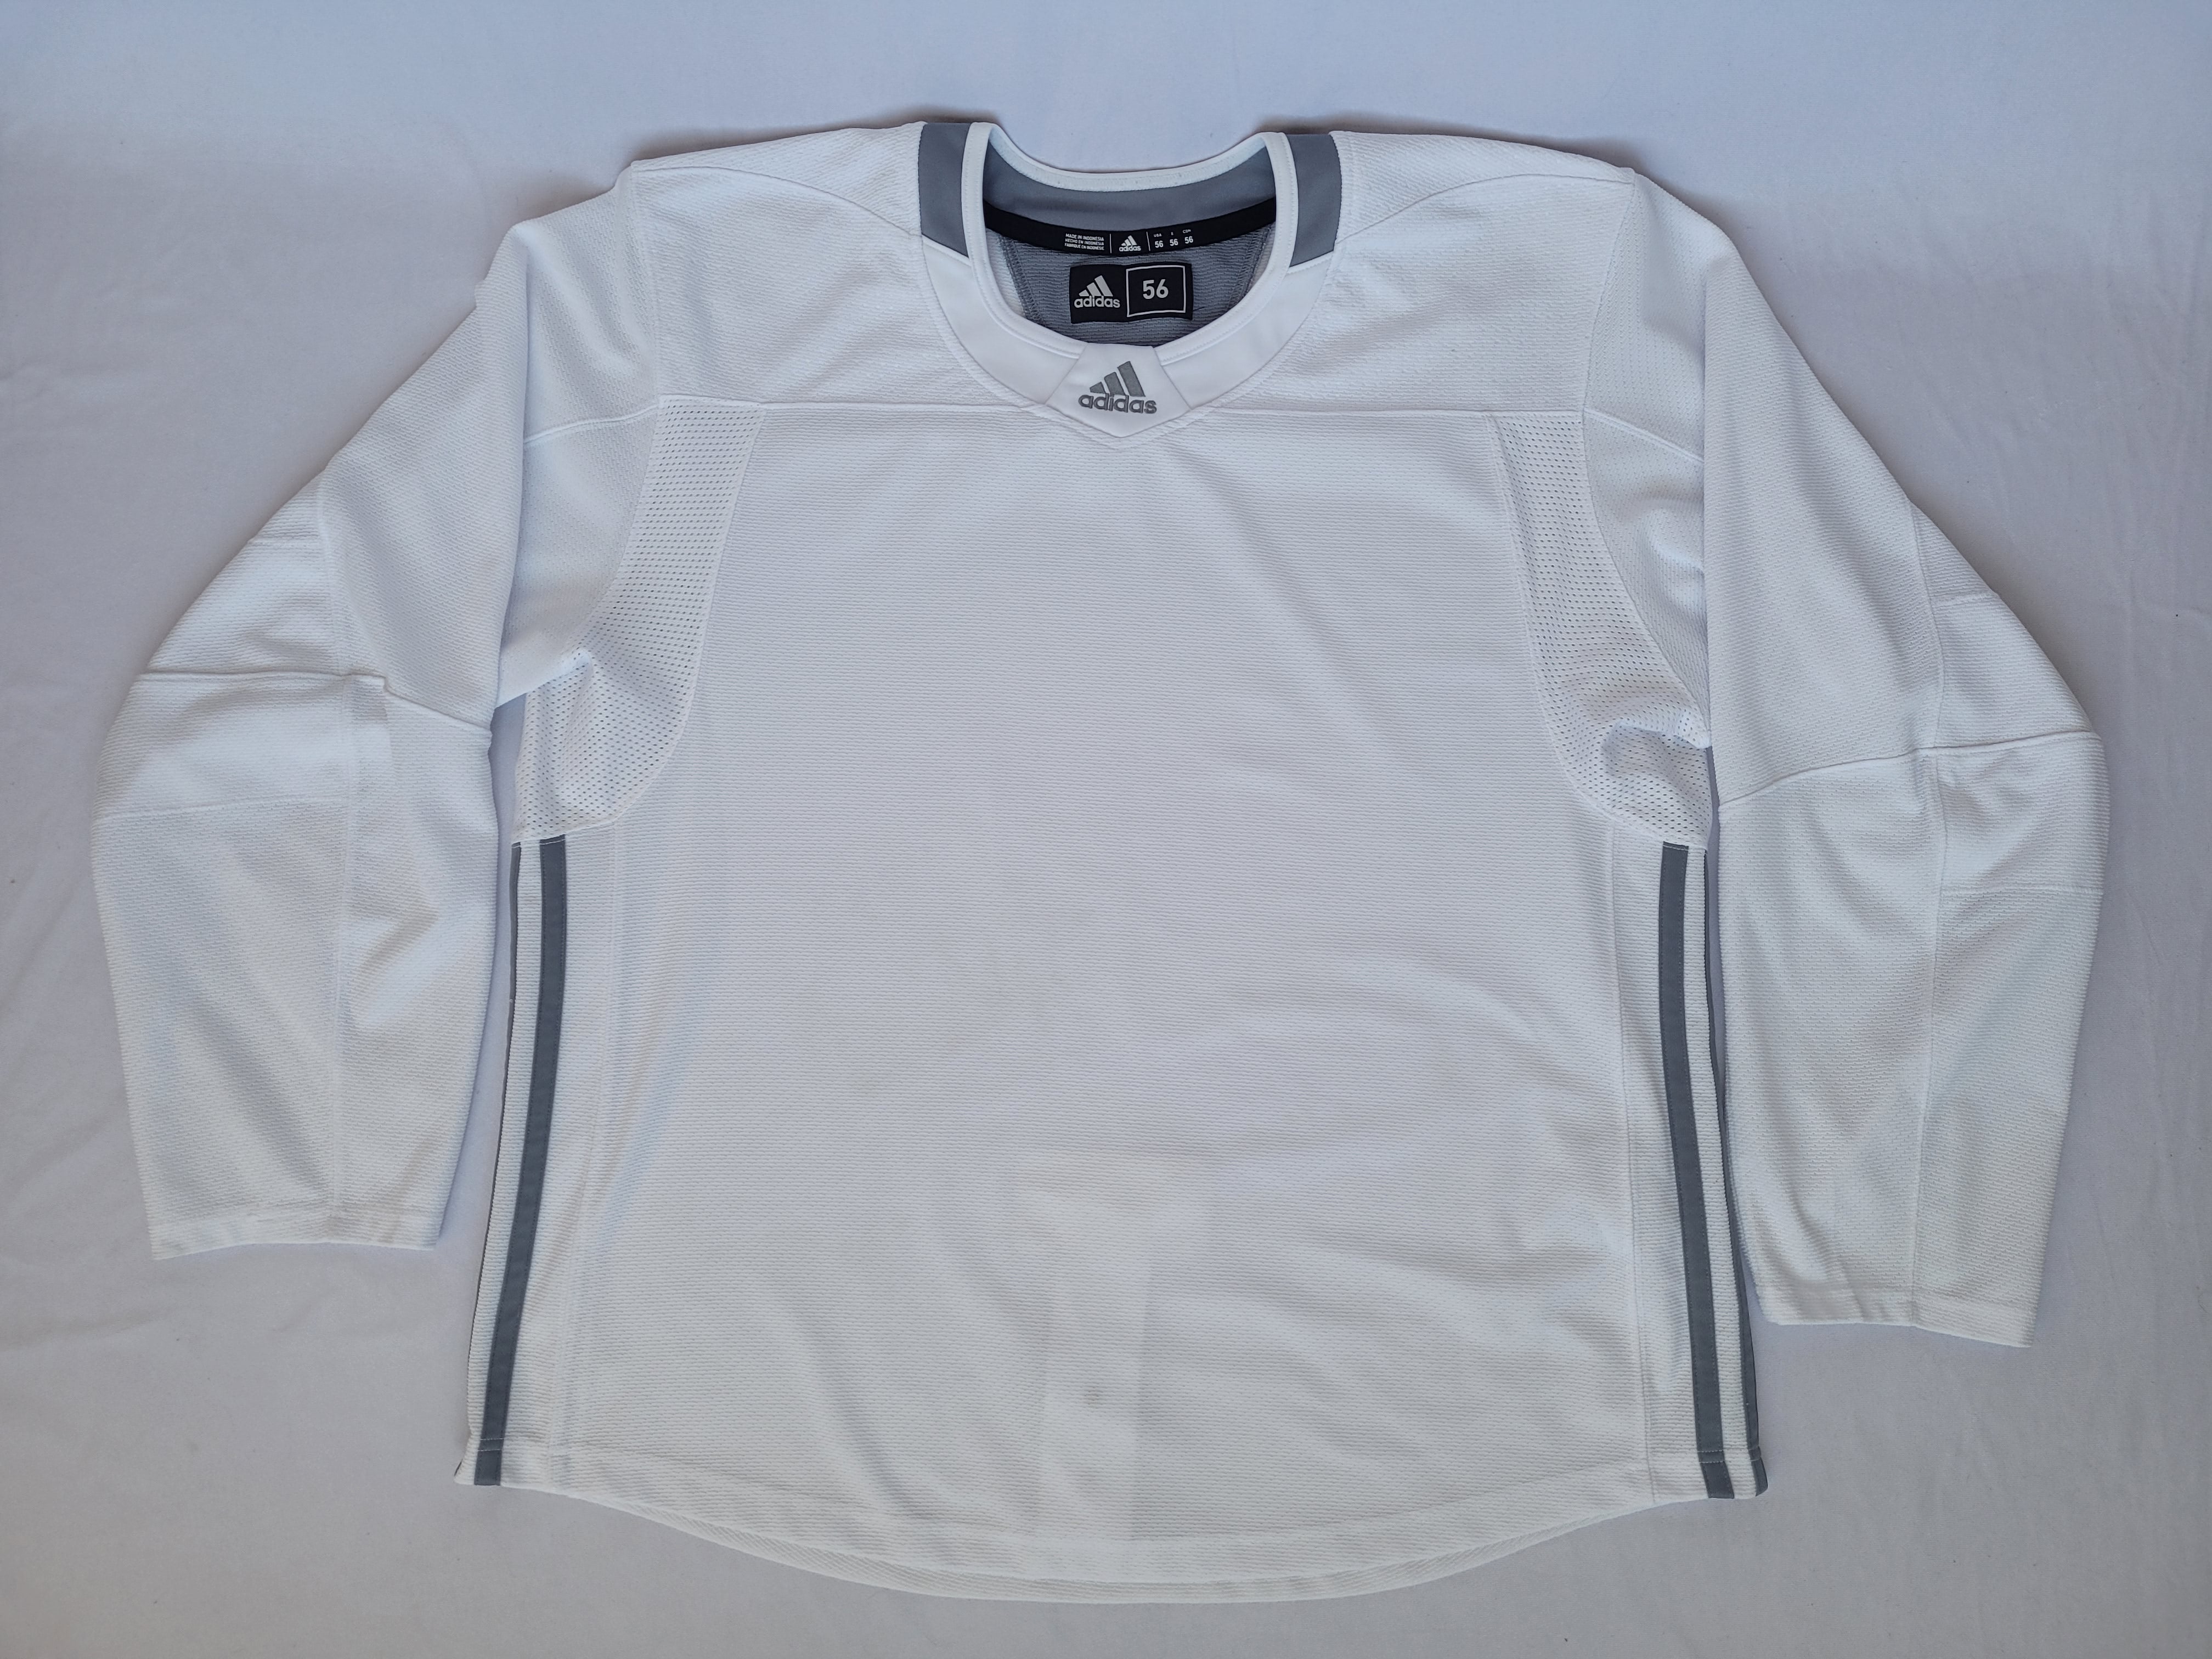 Adidas Youth Three Stripes Hockey Jersey, S/M / Navy/White